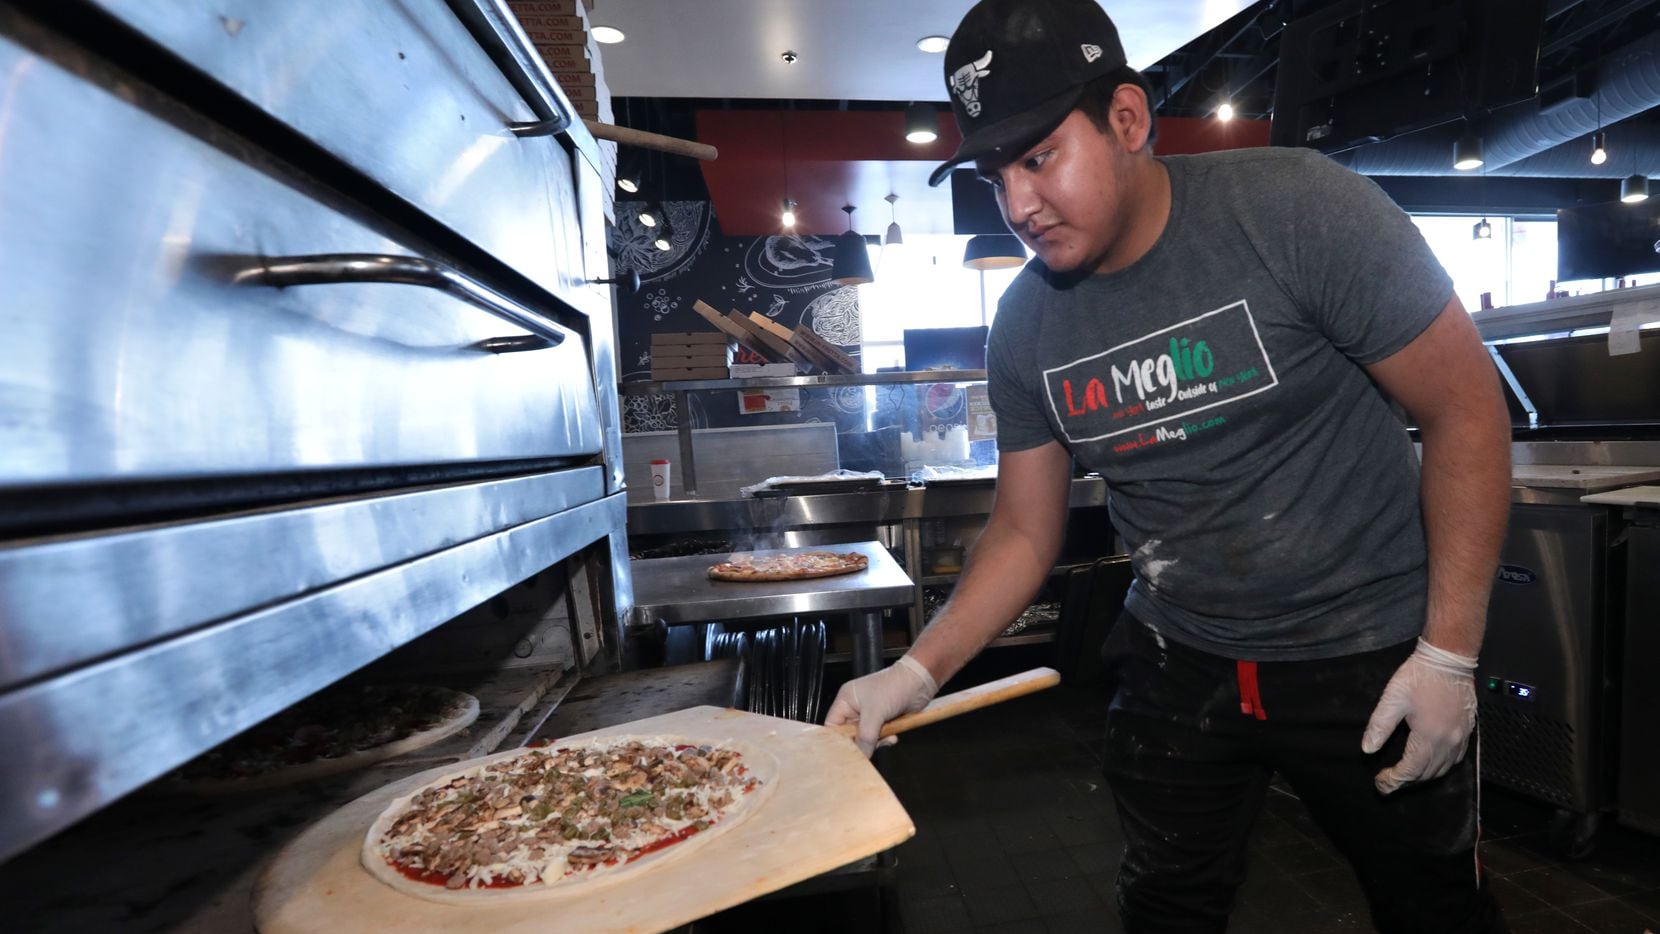 Juan José Orosco makes pizza at In-Fretta in Plano on April 2, 2020.